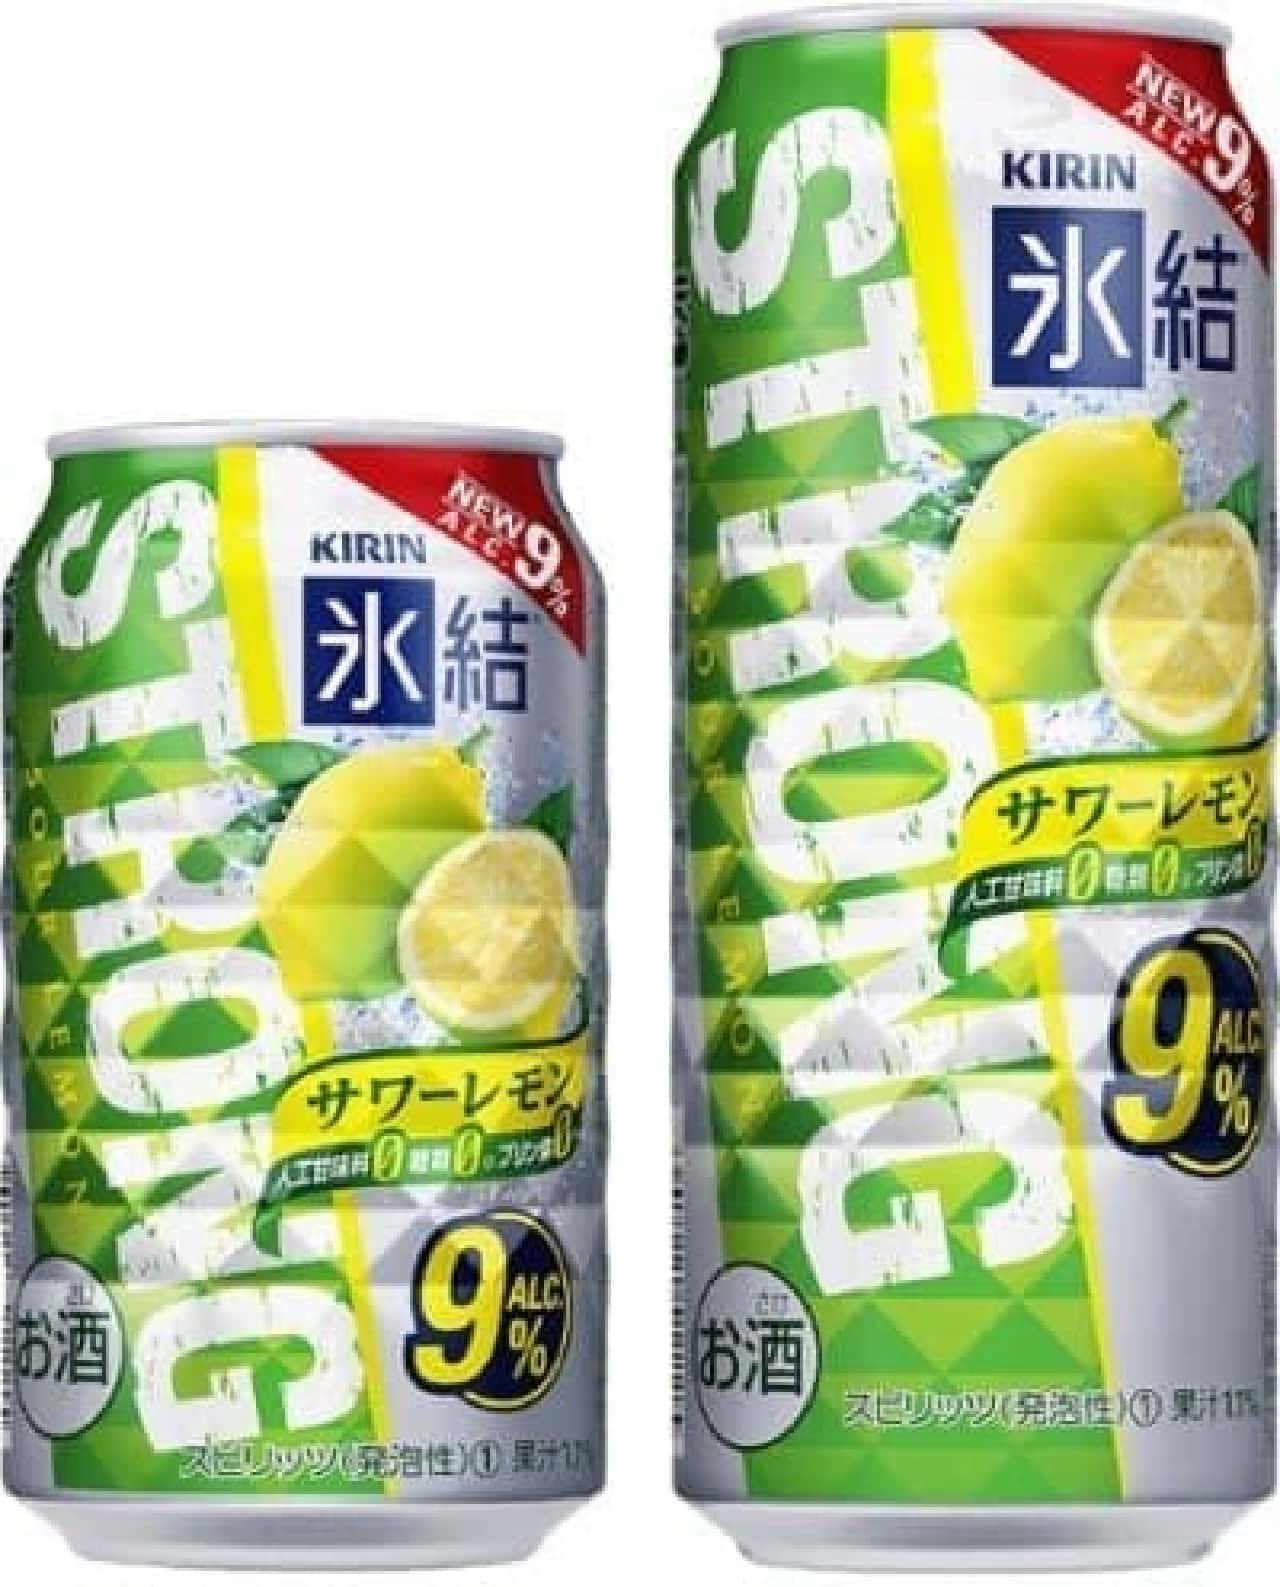 Kirin Beer "Kirin Freezing Strong Sour Lemon"